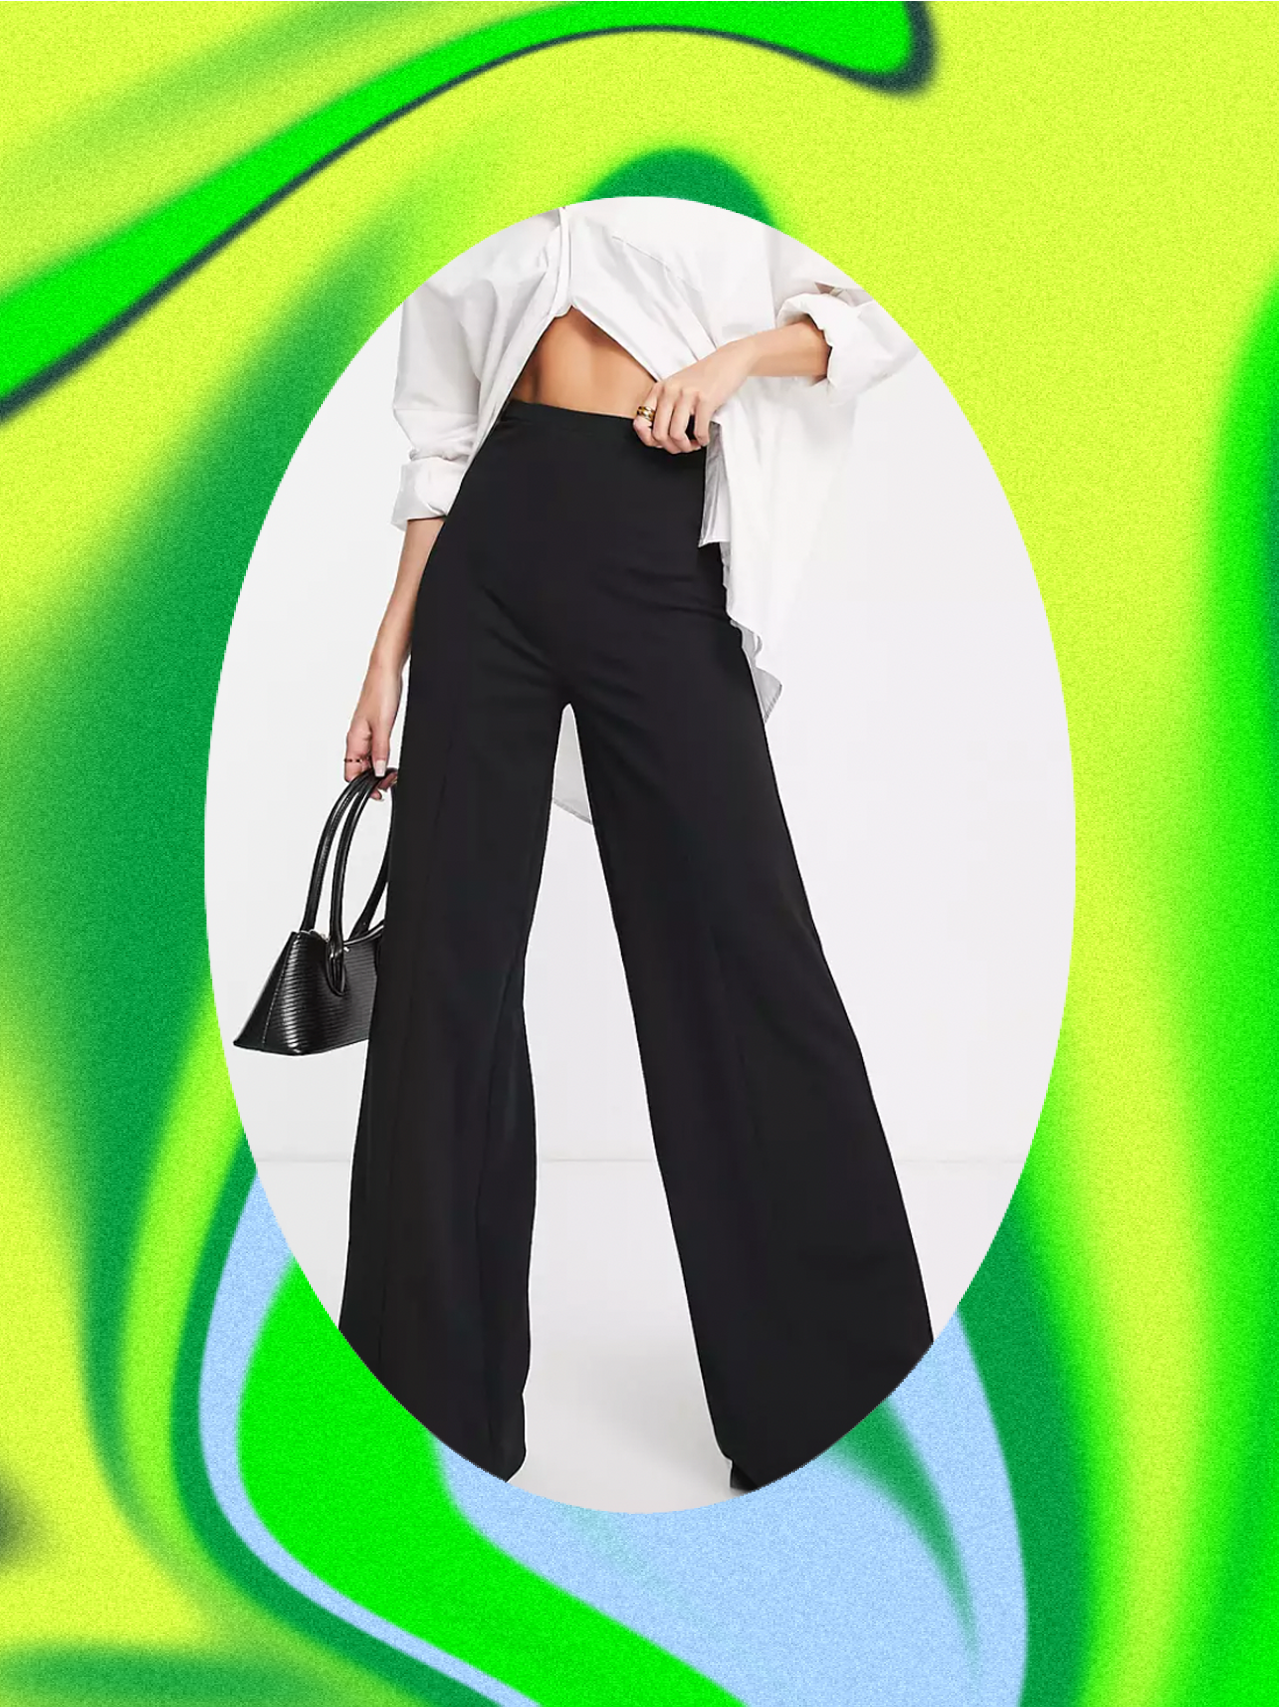 latest trousers design for girls 2021 || Beautiful trouser design 2021 ||  naveedadesigner - YouTube